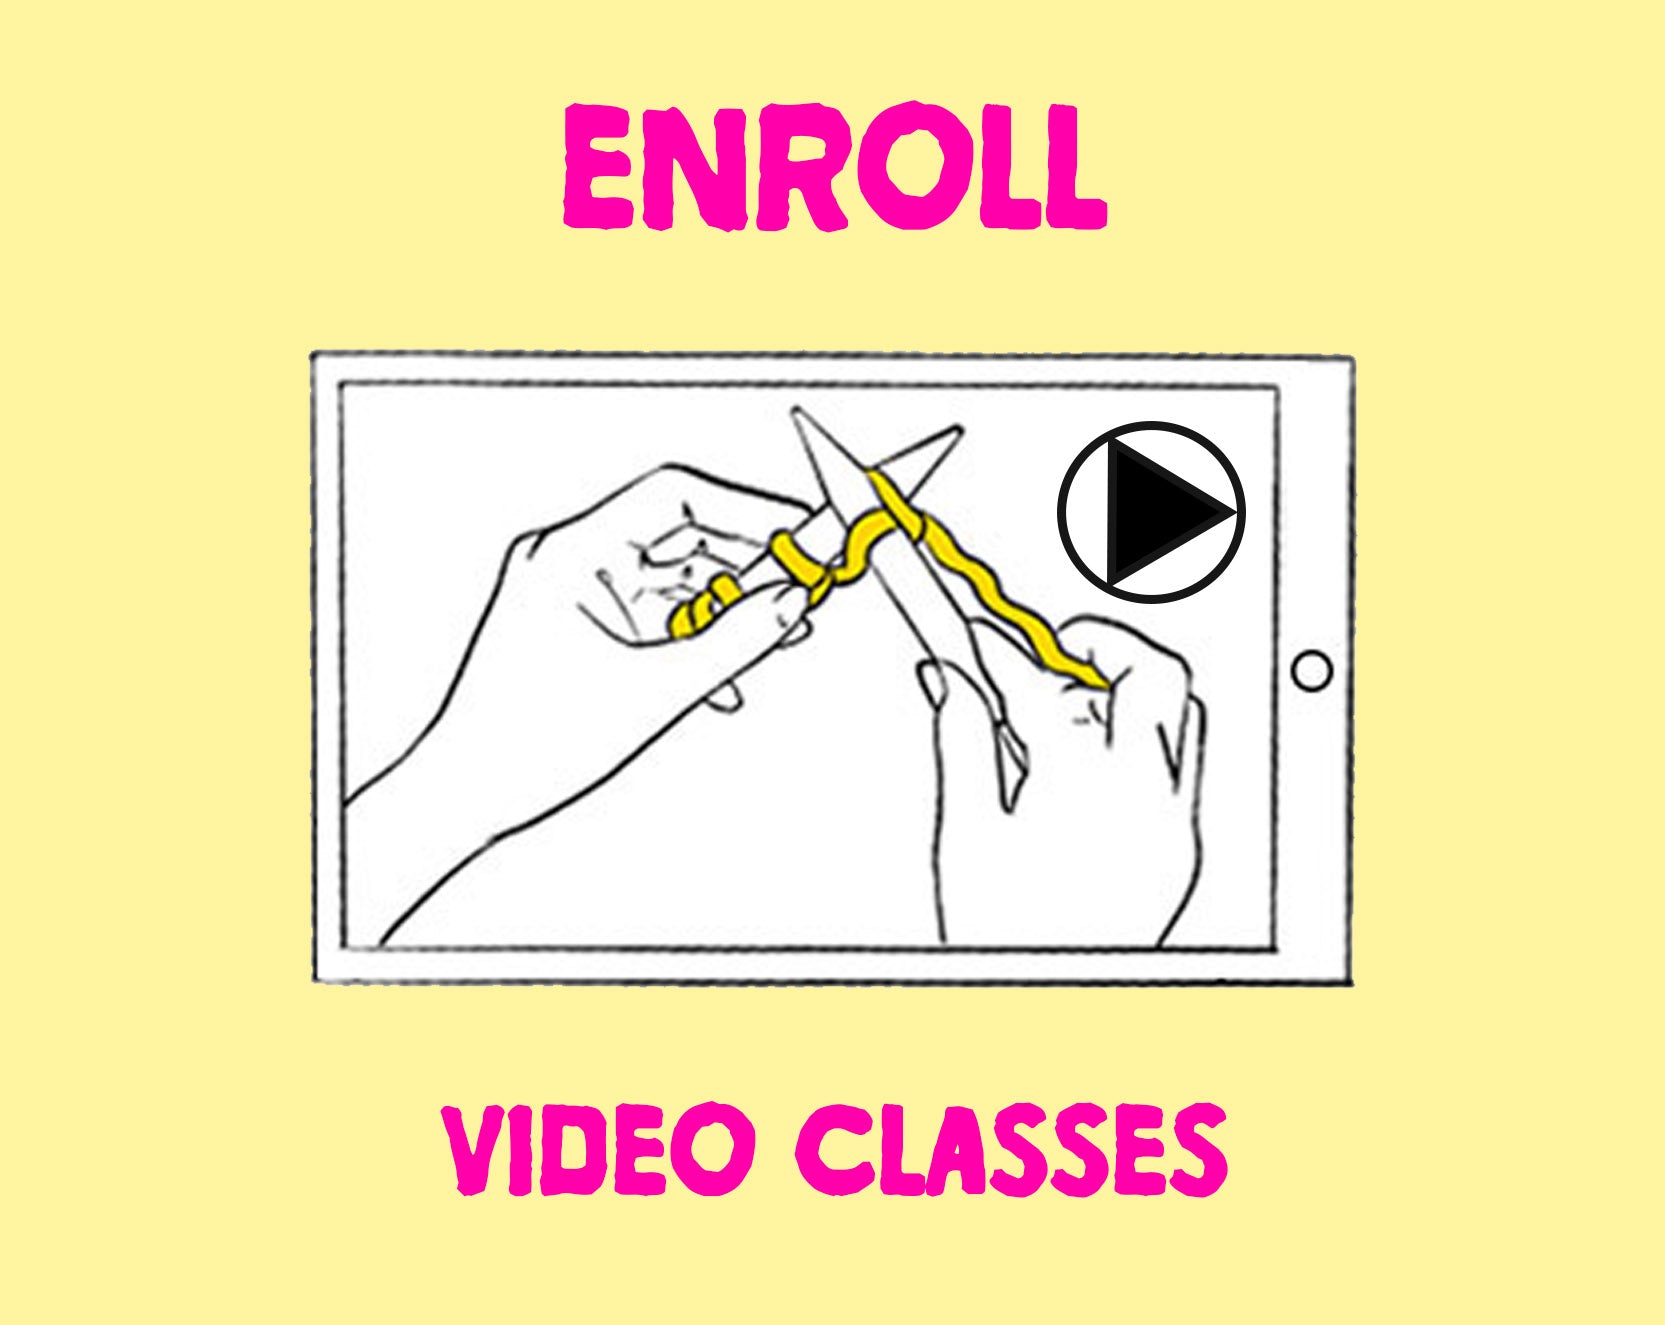 enroll_classes.jpg